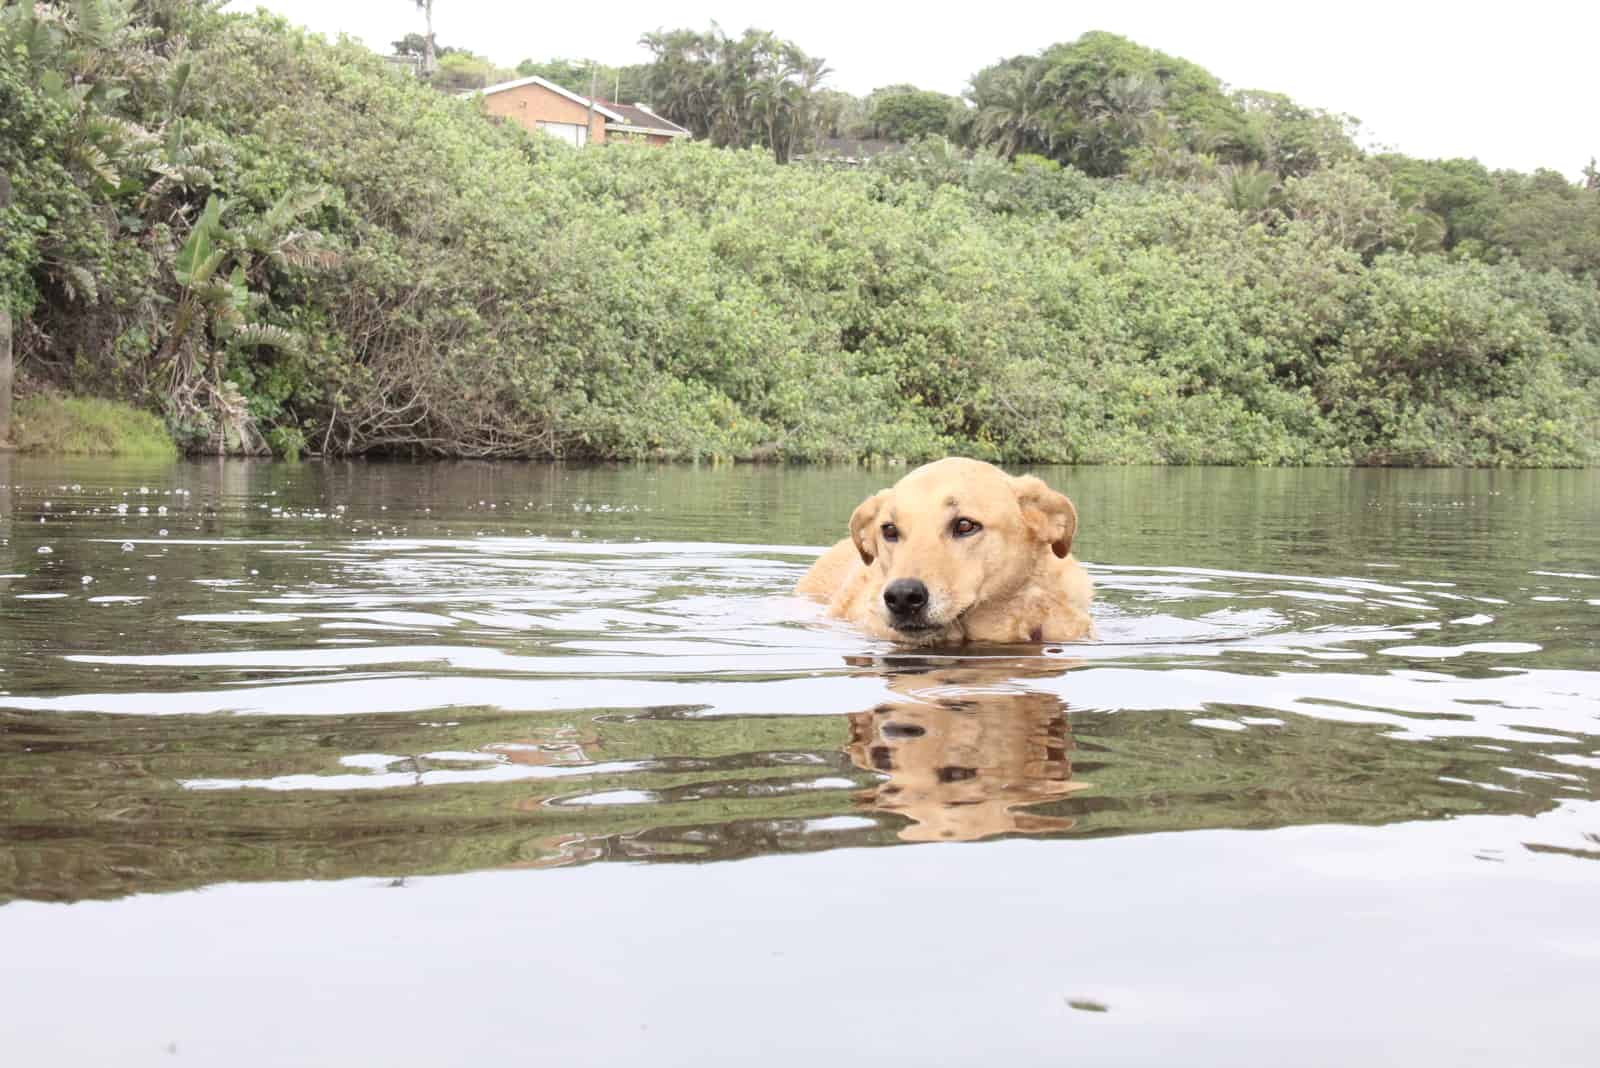 Sandy Yellow viszla dog in a river